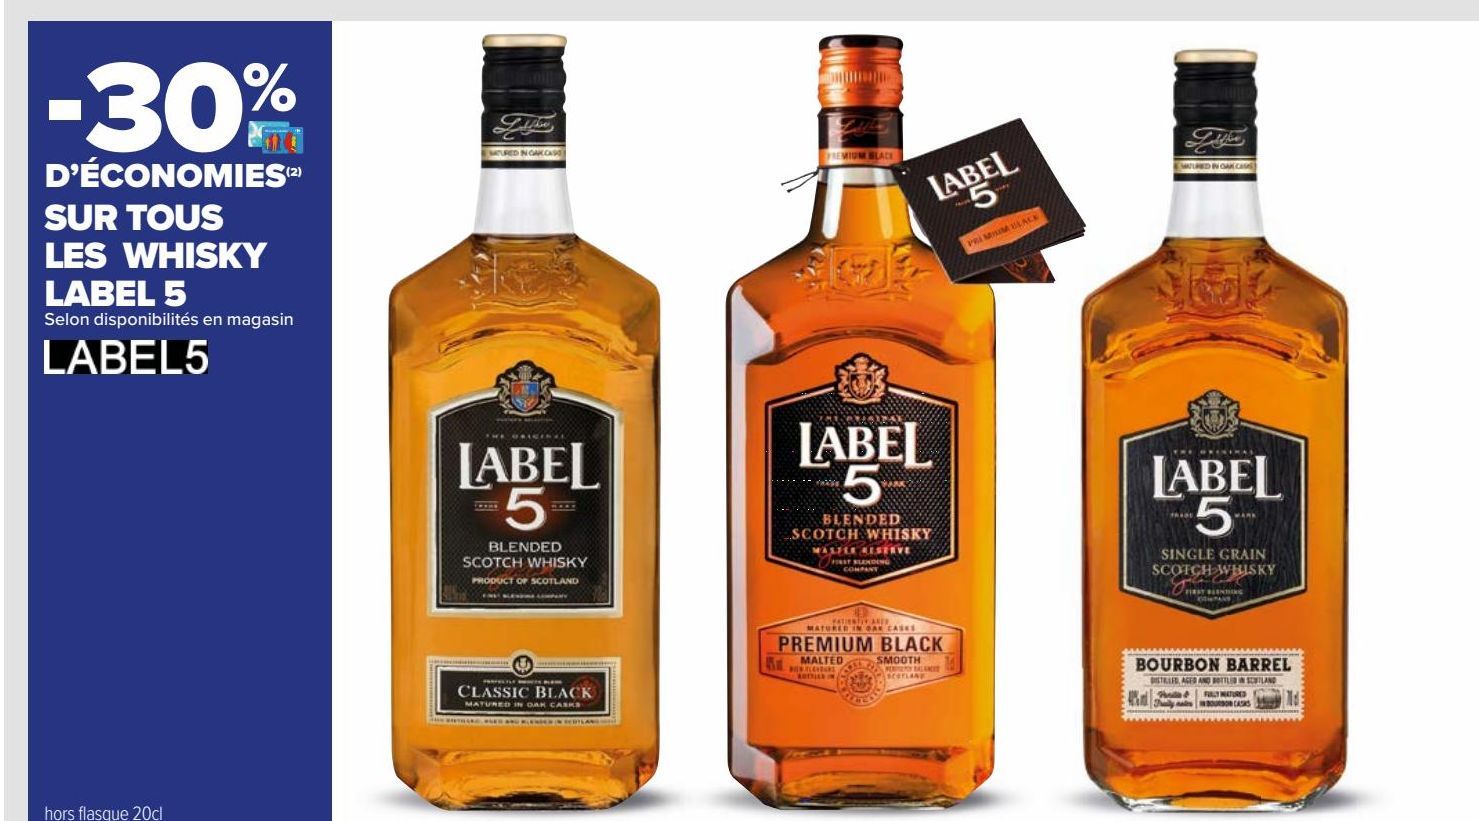 Tous whisky Label 5